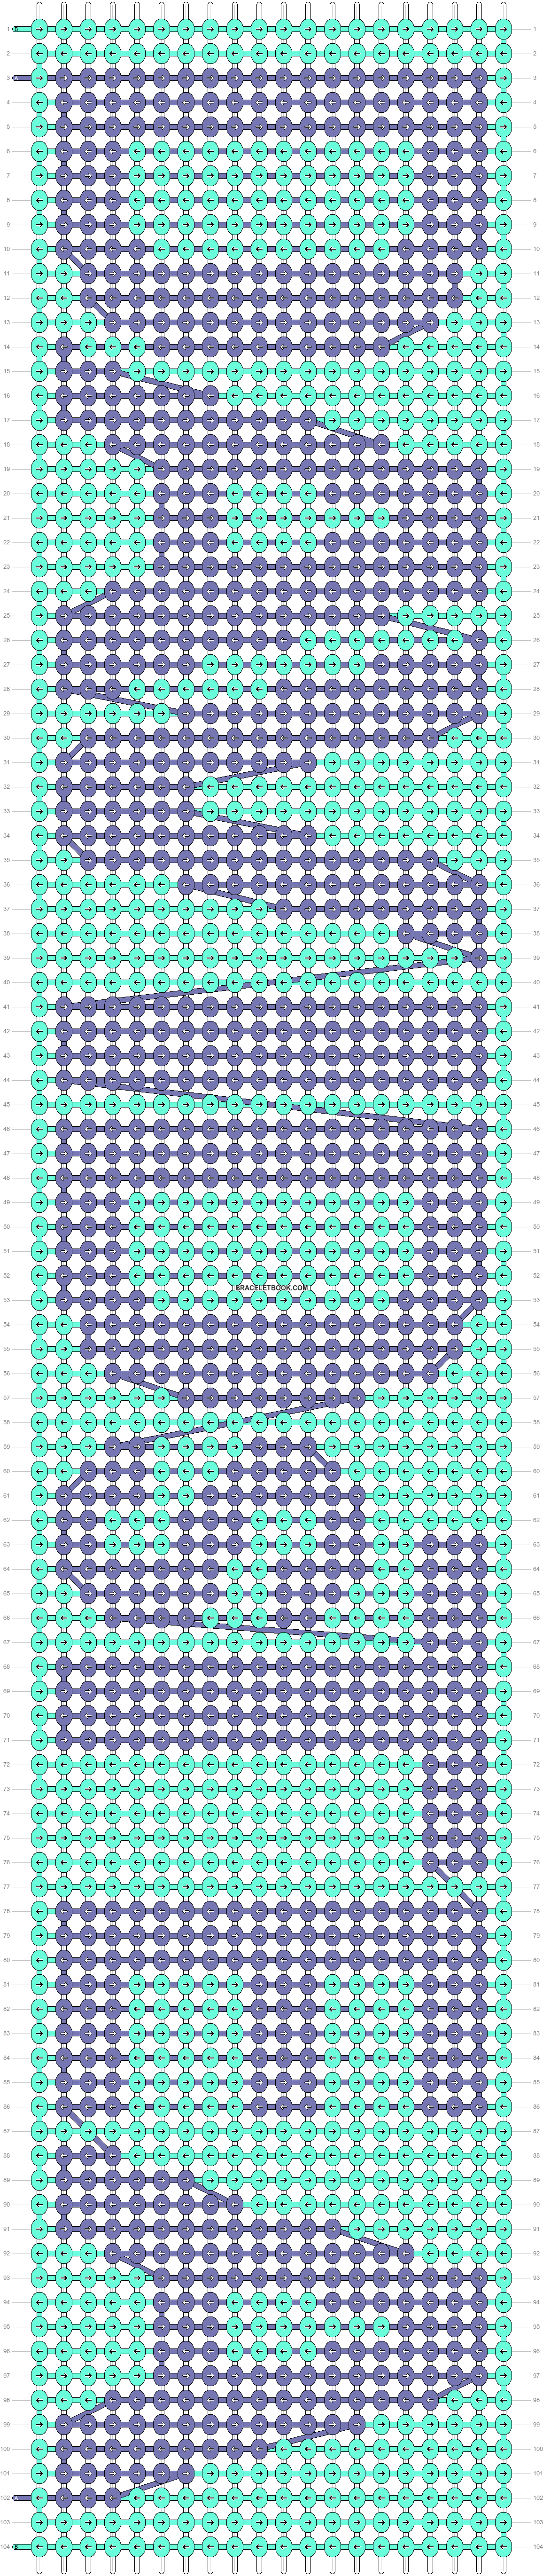 Alpha pattern #28584 variation #15599 pattern